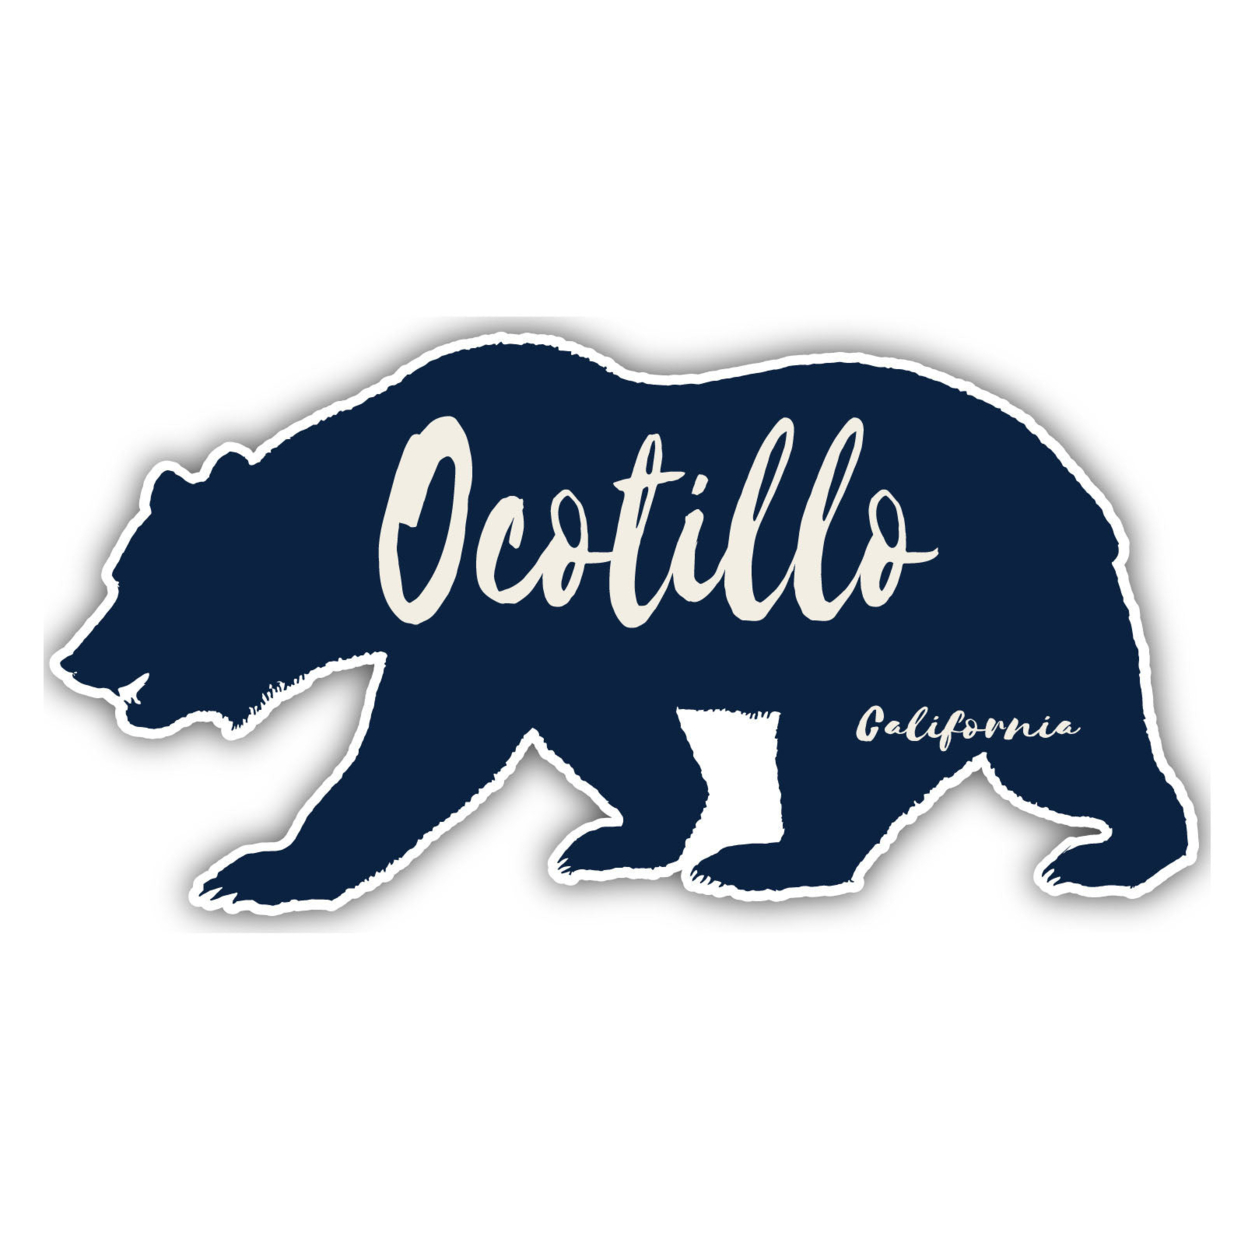 Ocotillo Wells California Souvenir Decorative Stickers (Choose Theme And Size) - Single Unit, 2-Inch, Bear